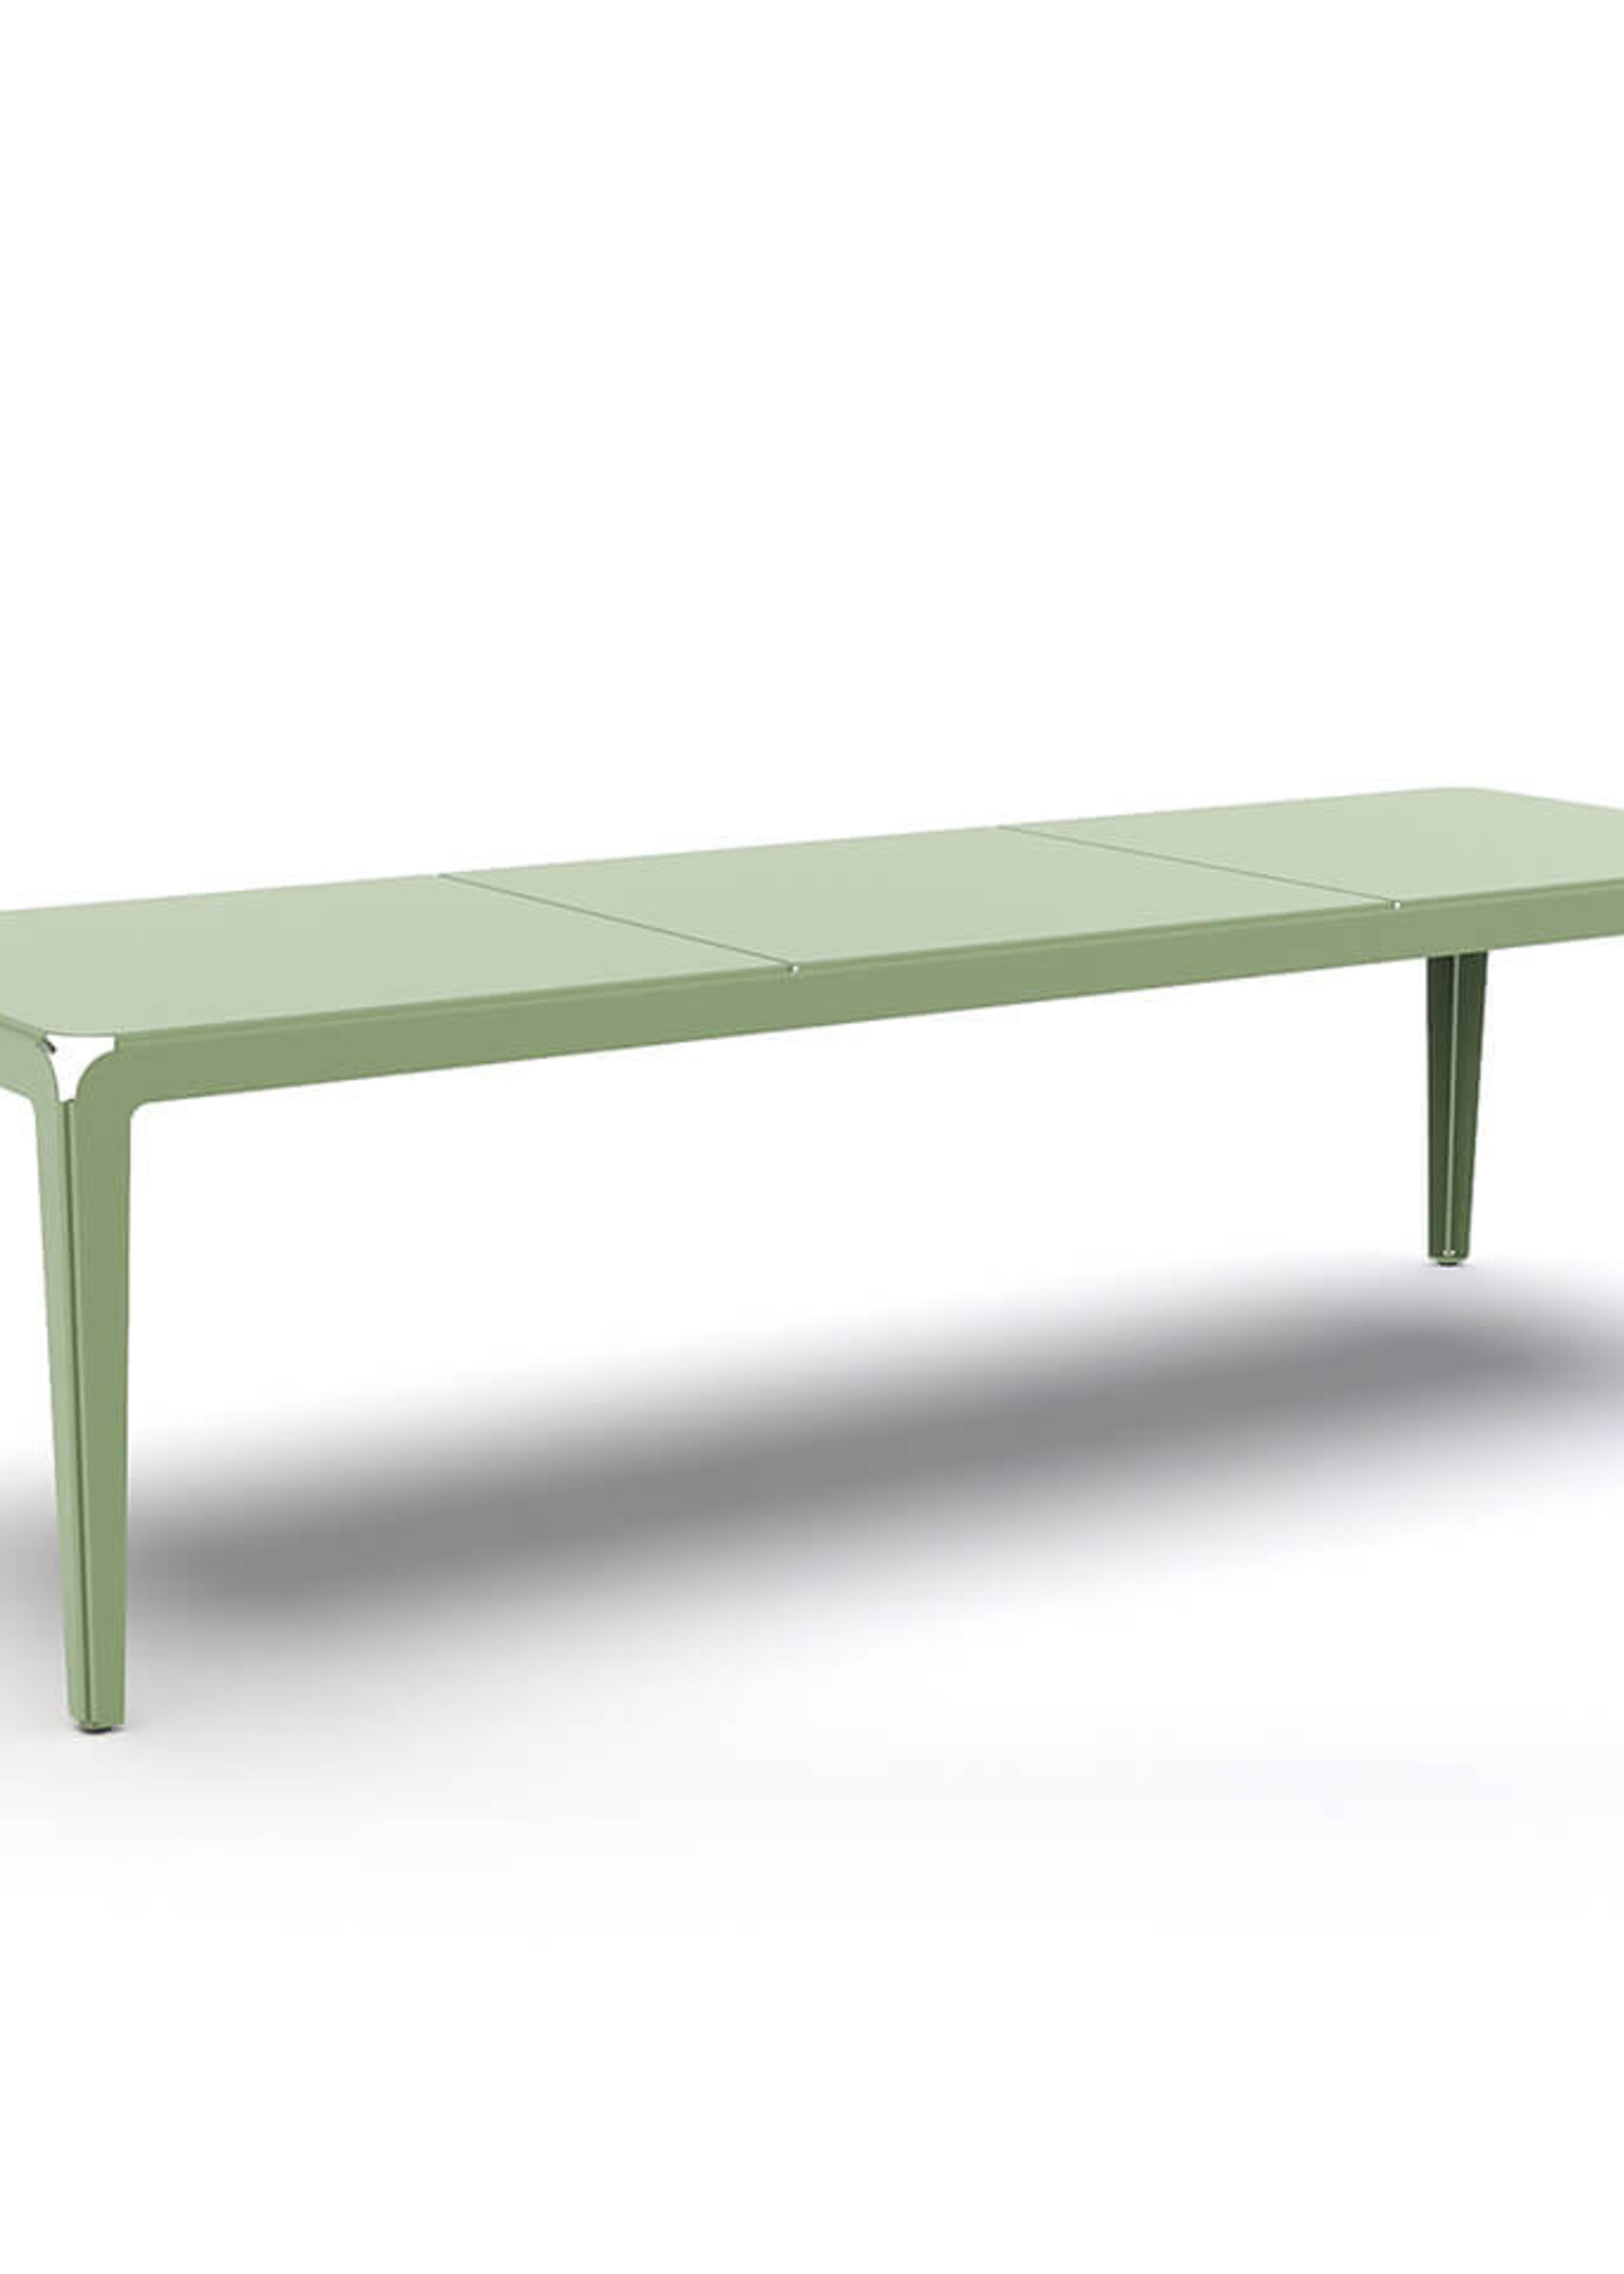 Weltevree Weltevree - Bended Table 270 - Table de jardin légère en aluminium - Vert pâle